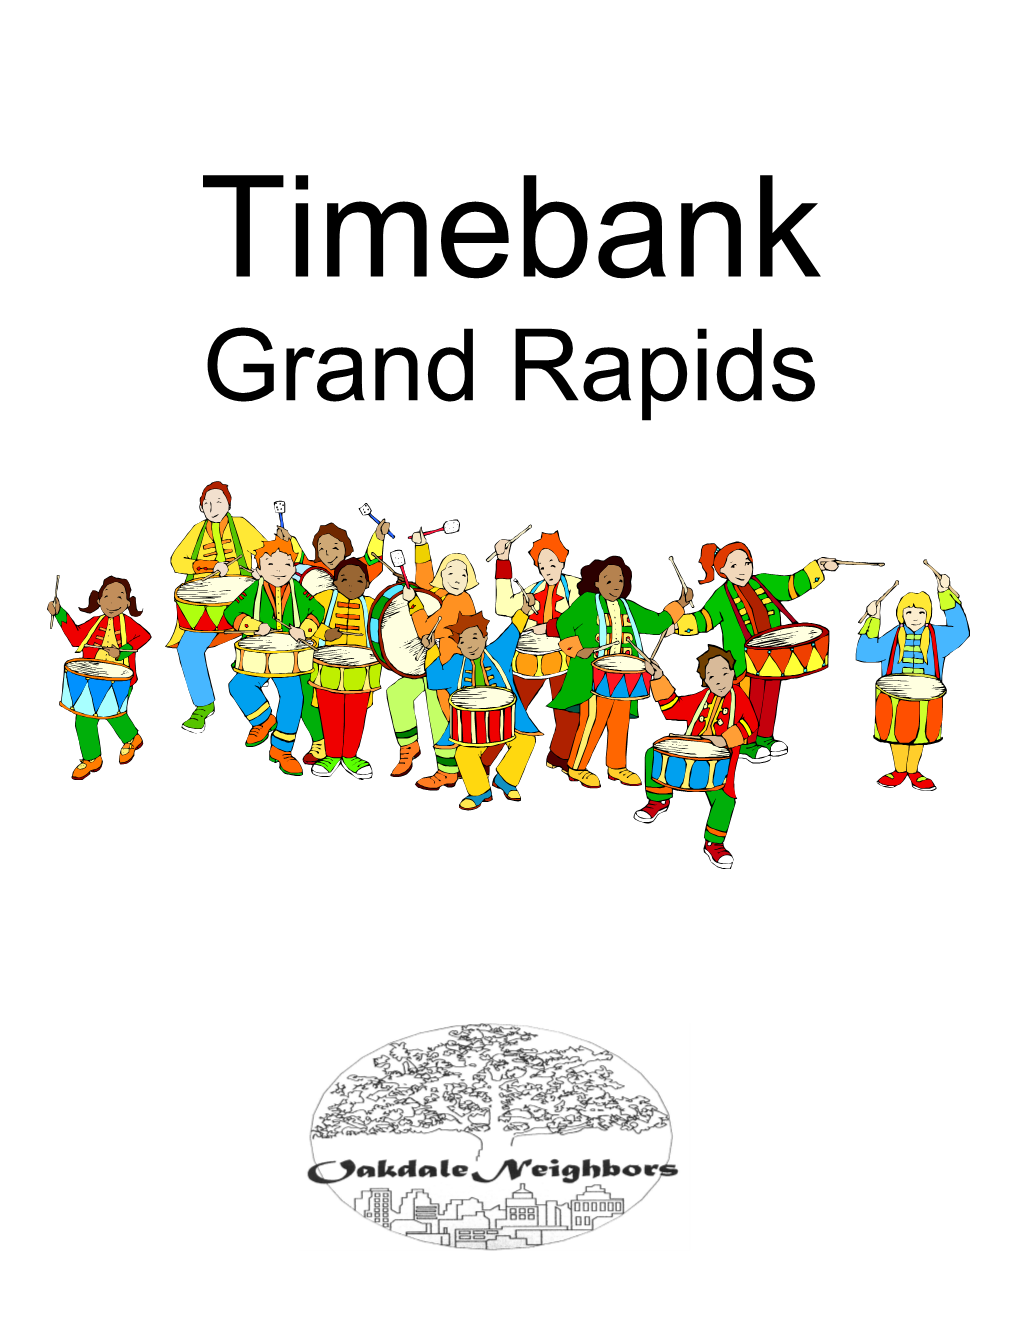 Timebank Grand Rapids